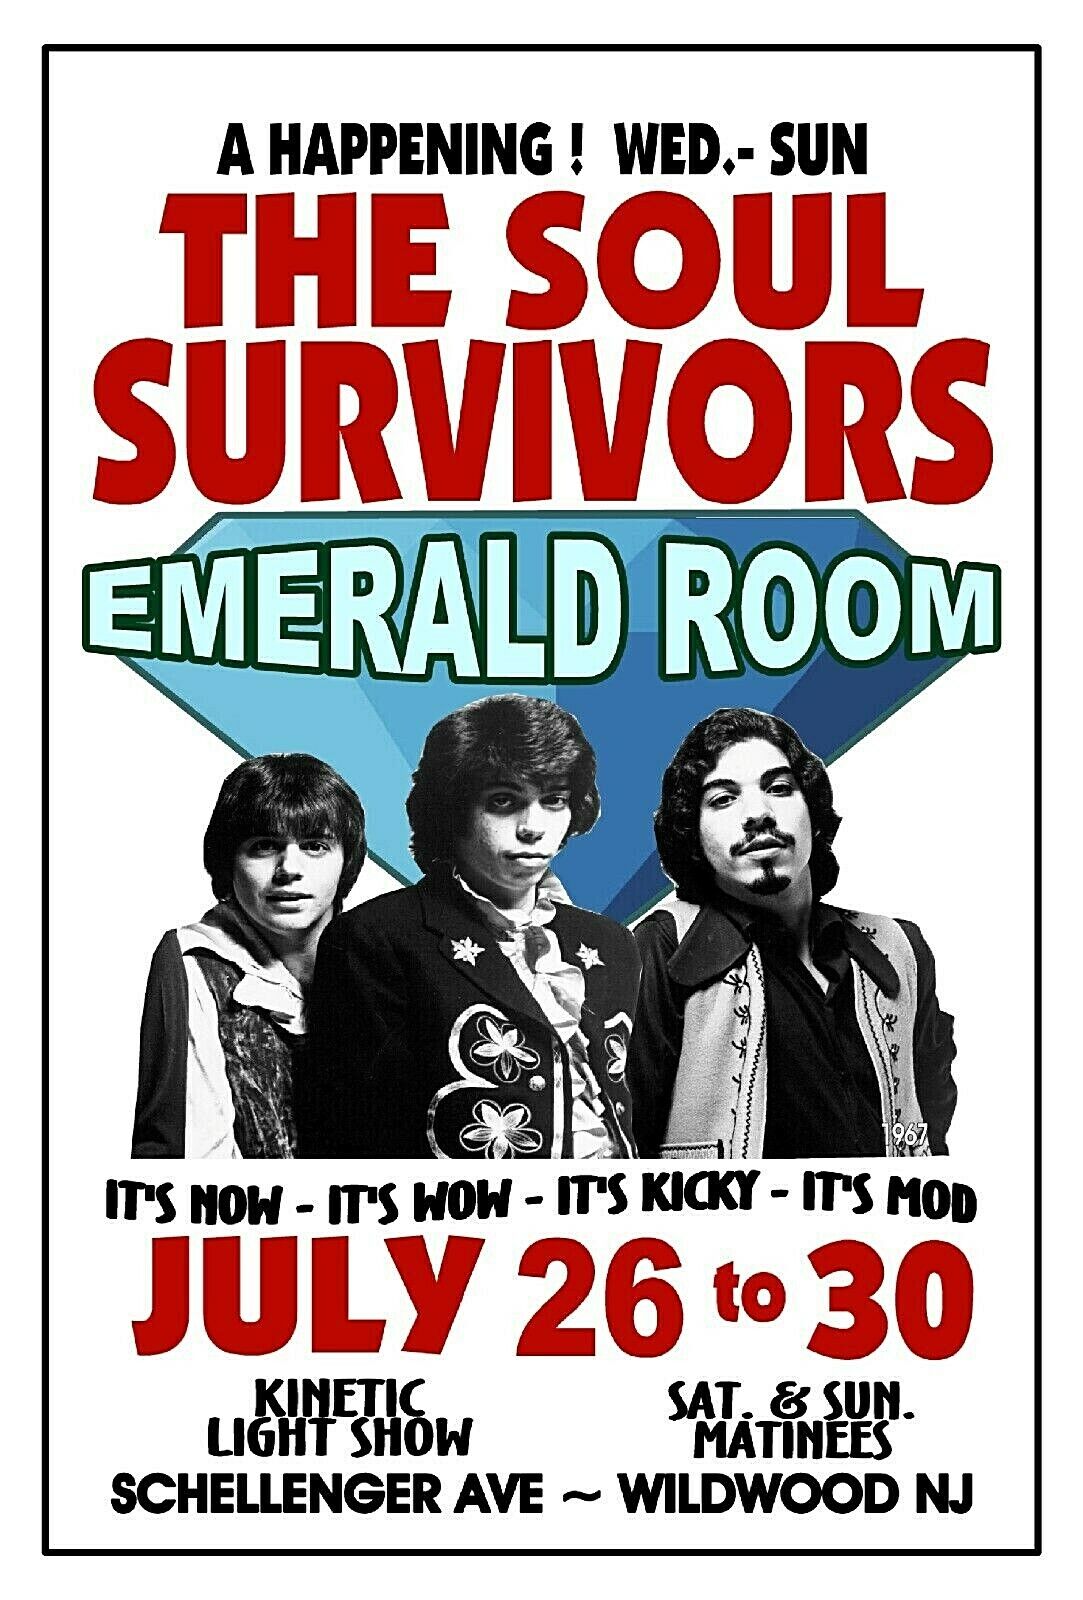 THE SOUL SURVIVORS 1967 EMERALD ROOM Nightclub POSTER CLUB Wildwood NJ